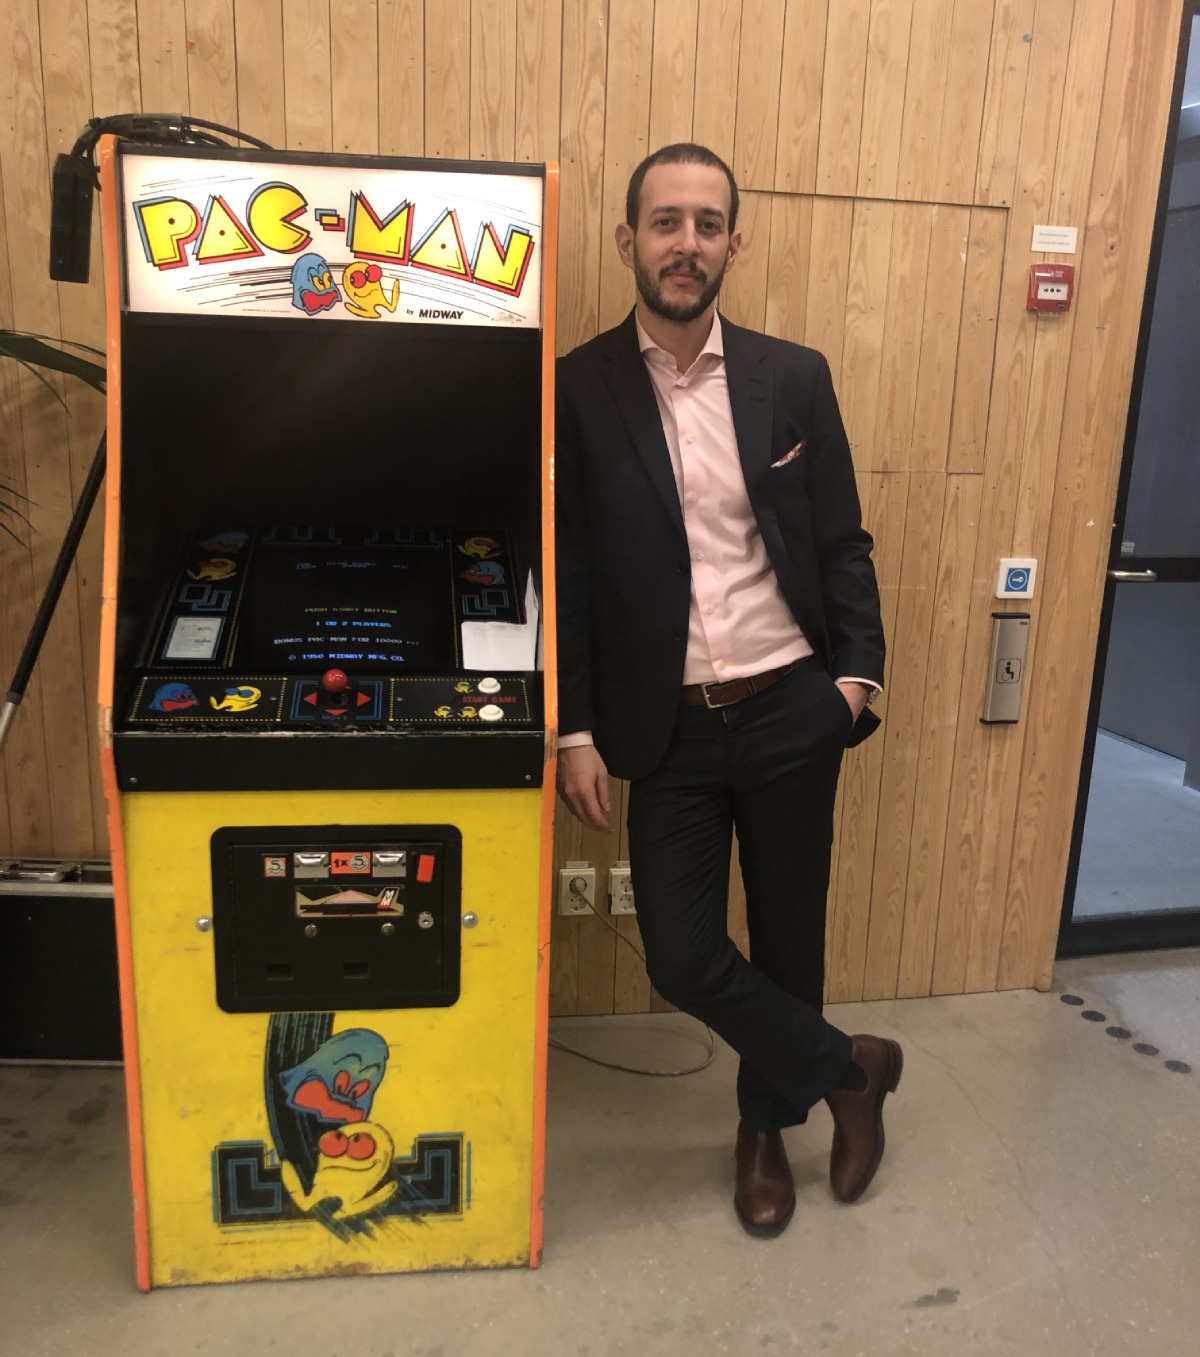 Found a Pac-Man Arcade Machine!